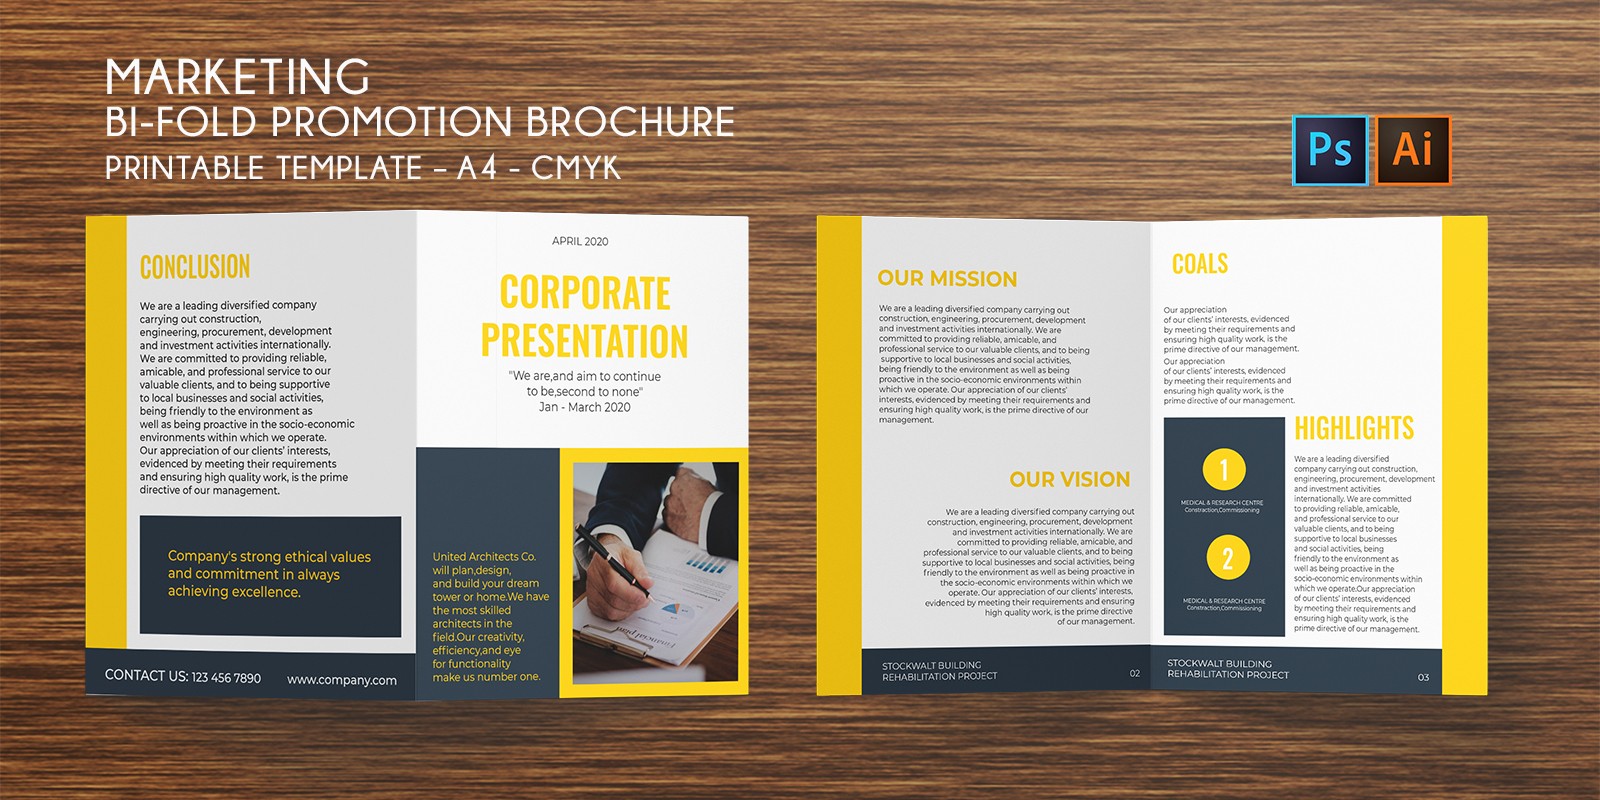 Bi Fold Marketing Brochure Psd Ai Template By Graphicques Codester